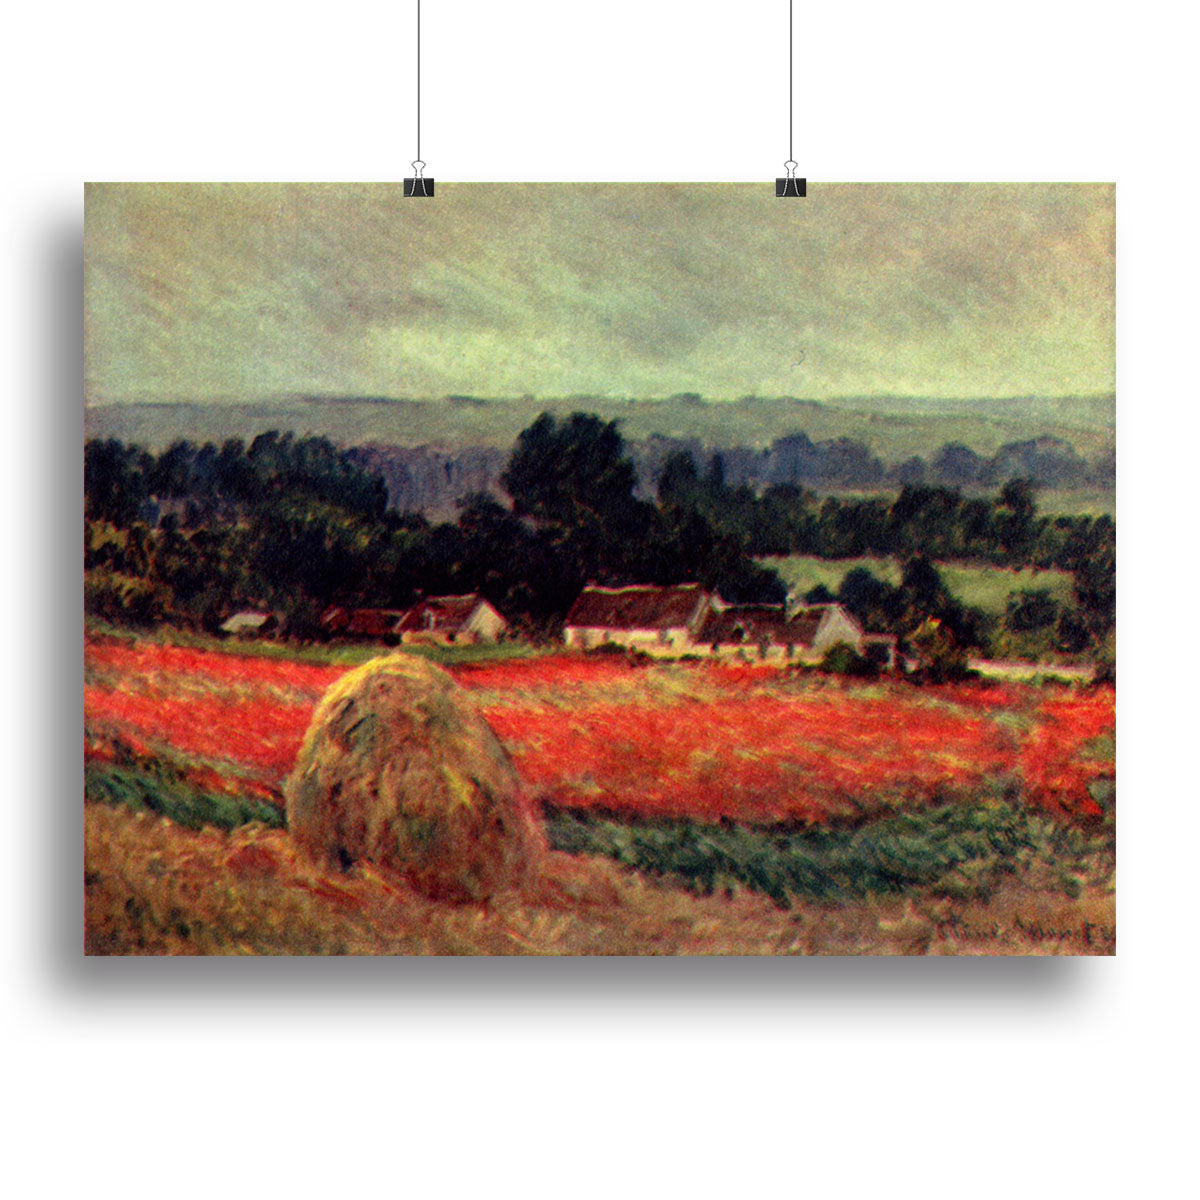 The poppy Blumenfeld The barn by Monet Canvas Print or Poster - Canvas Art Rocks - 2